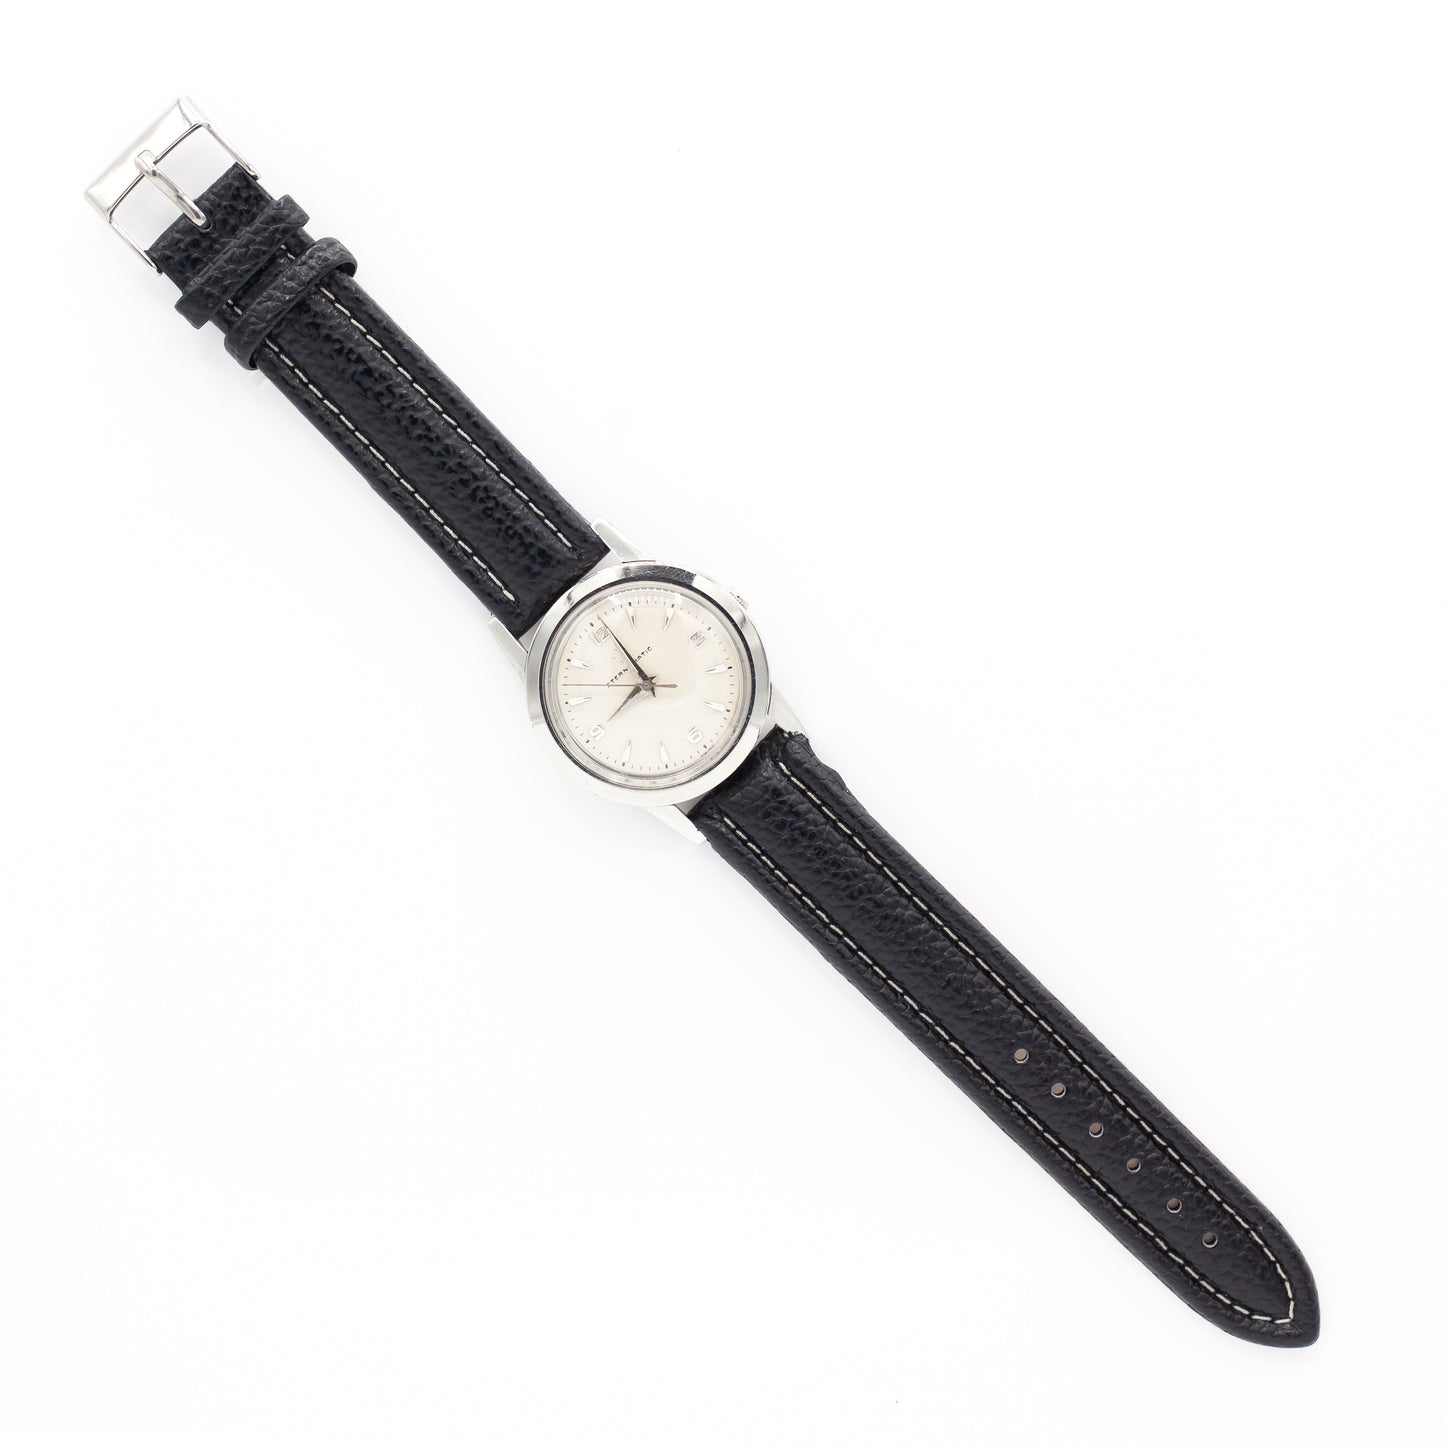 Vintage 1954 Eterna-matic Watch